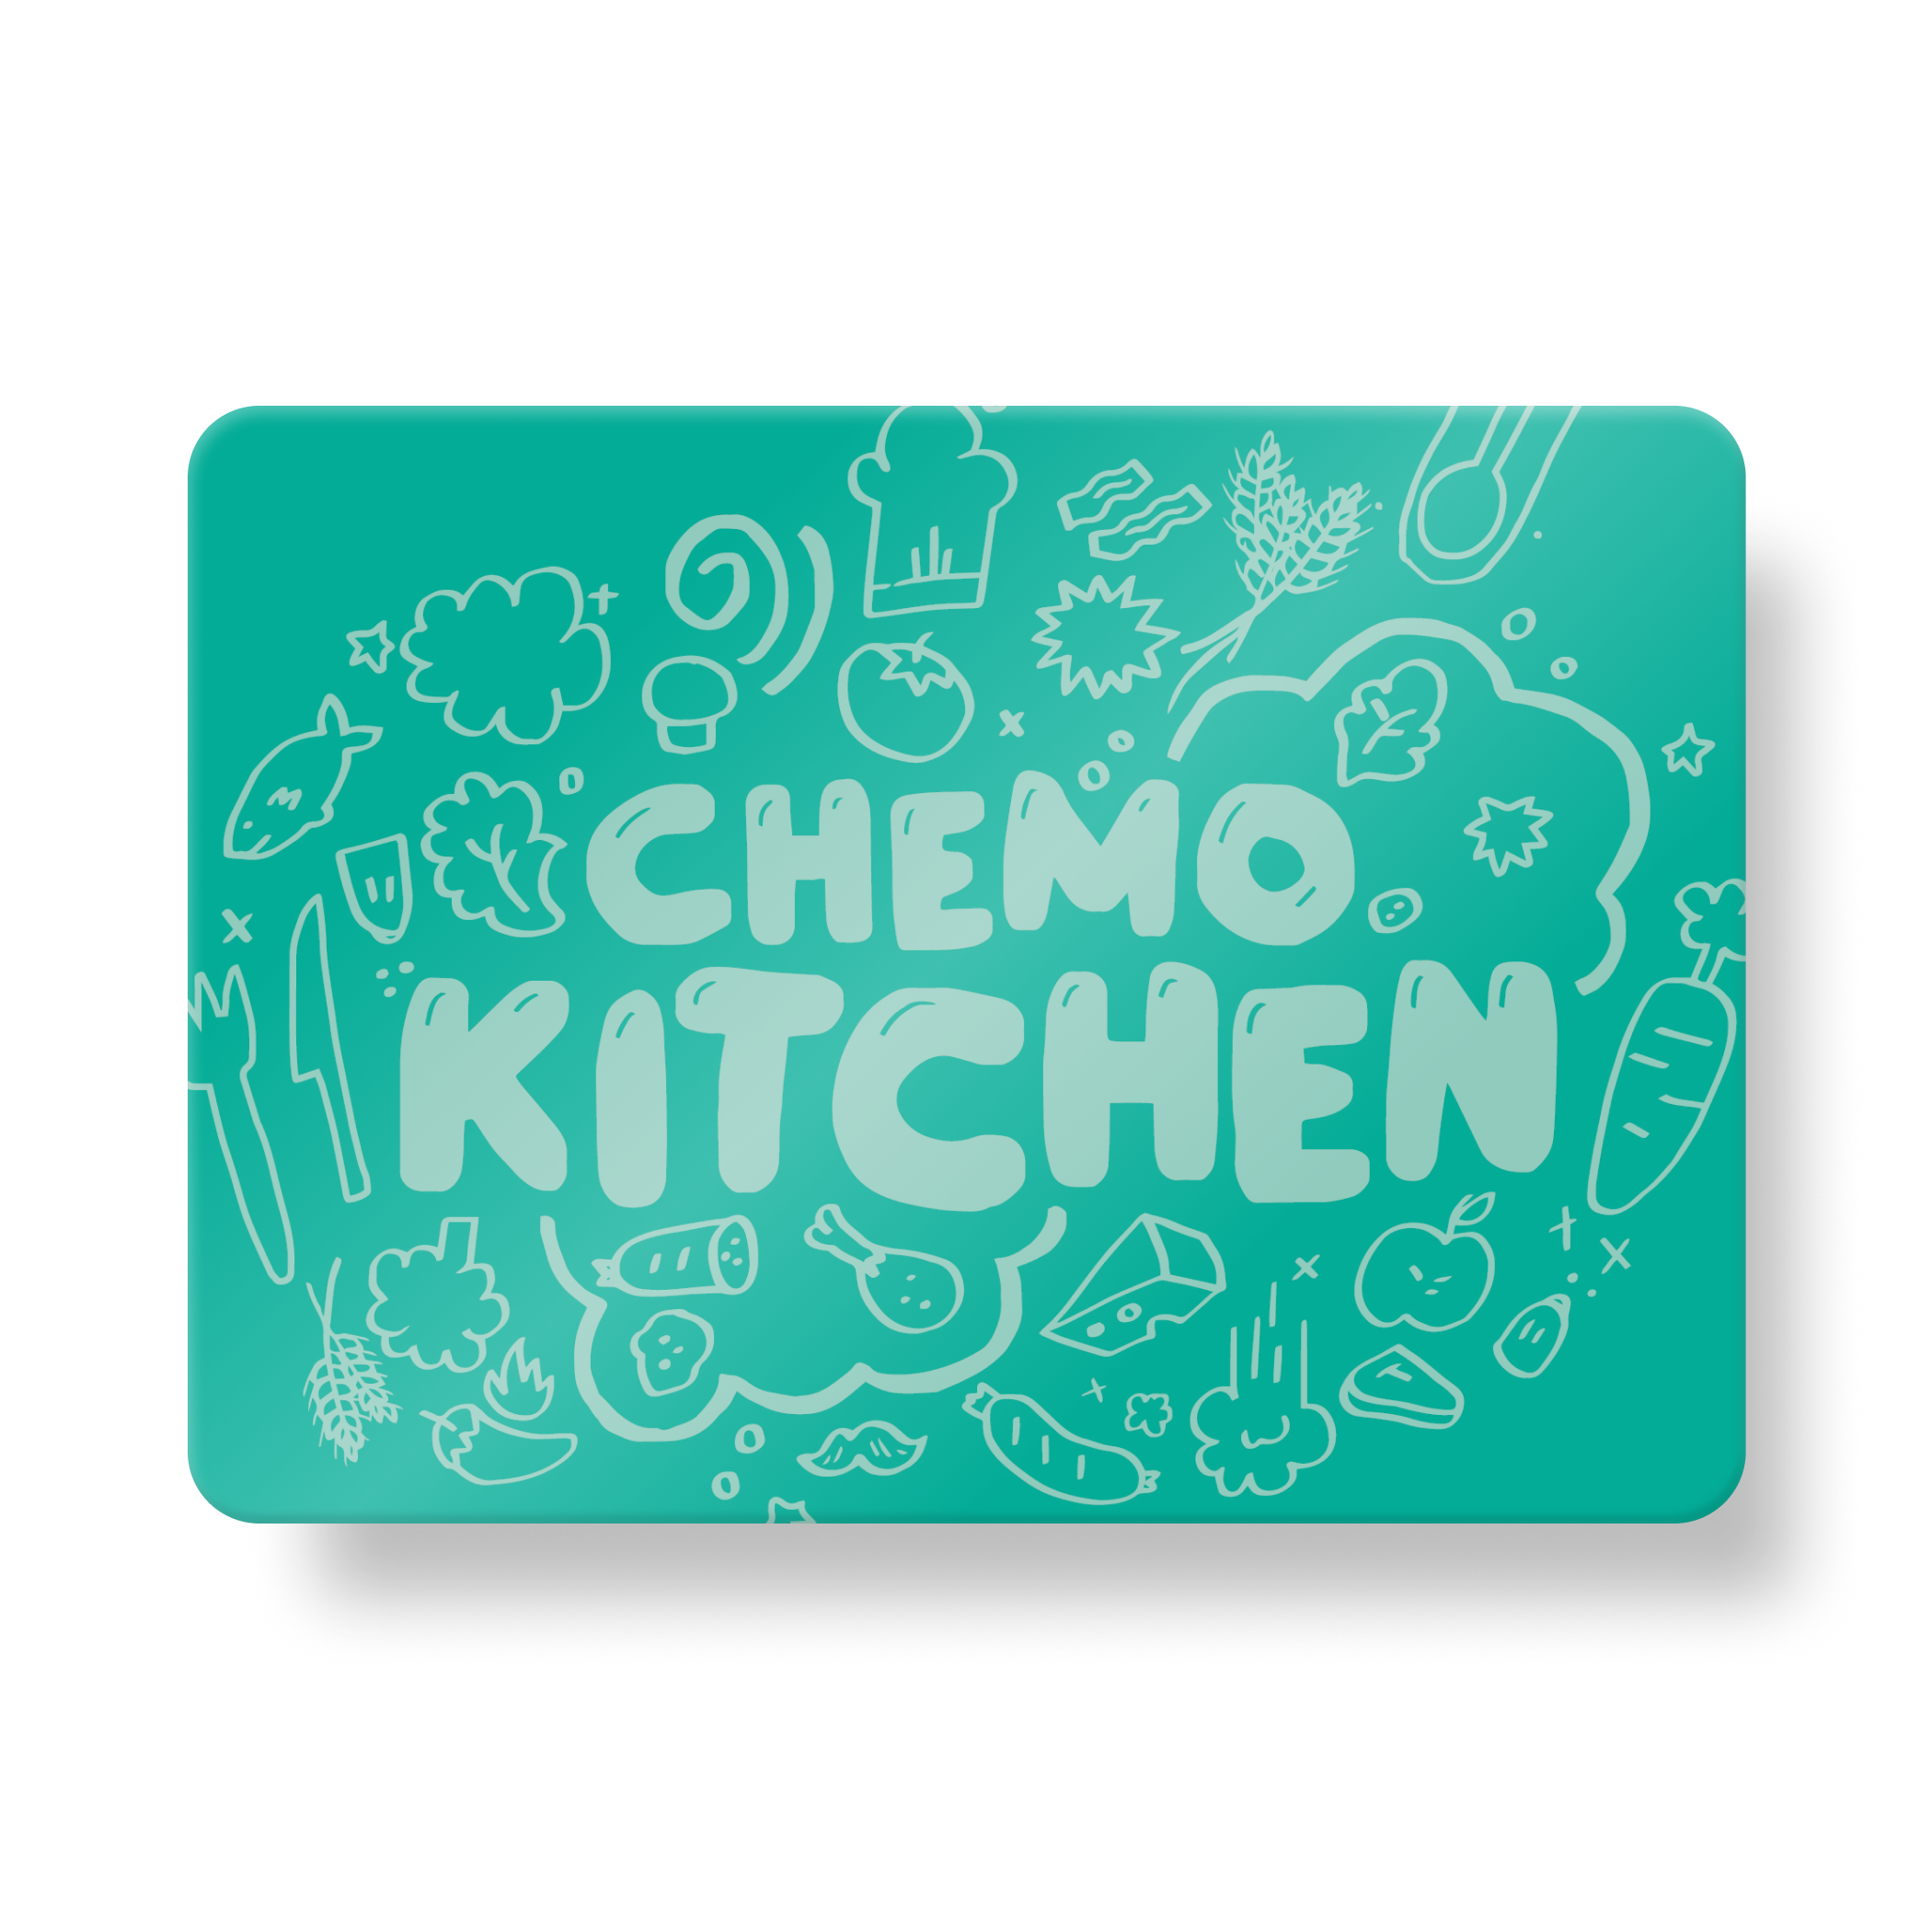 Chemo Kitchen Digital Gift Card